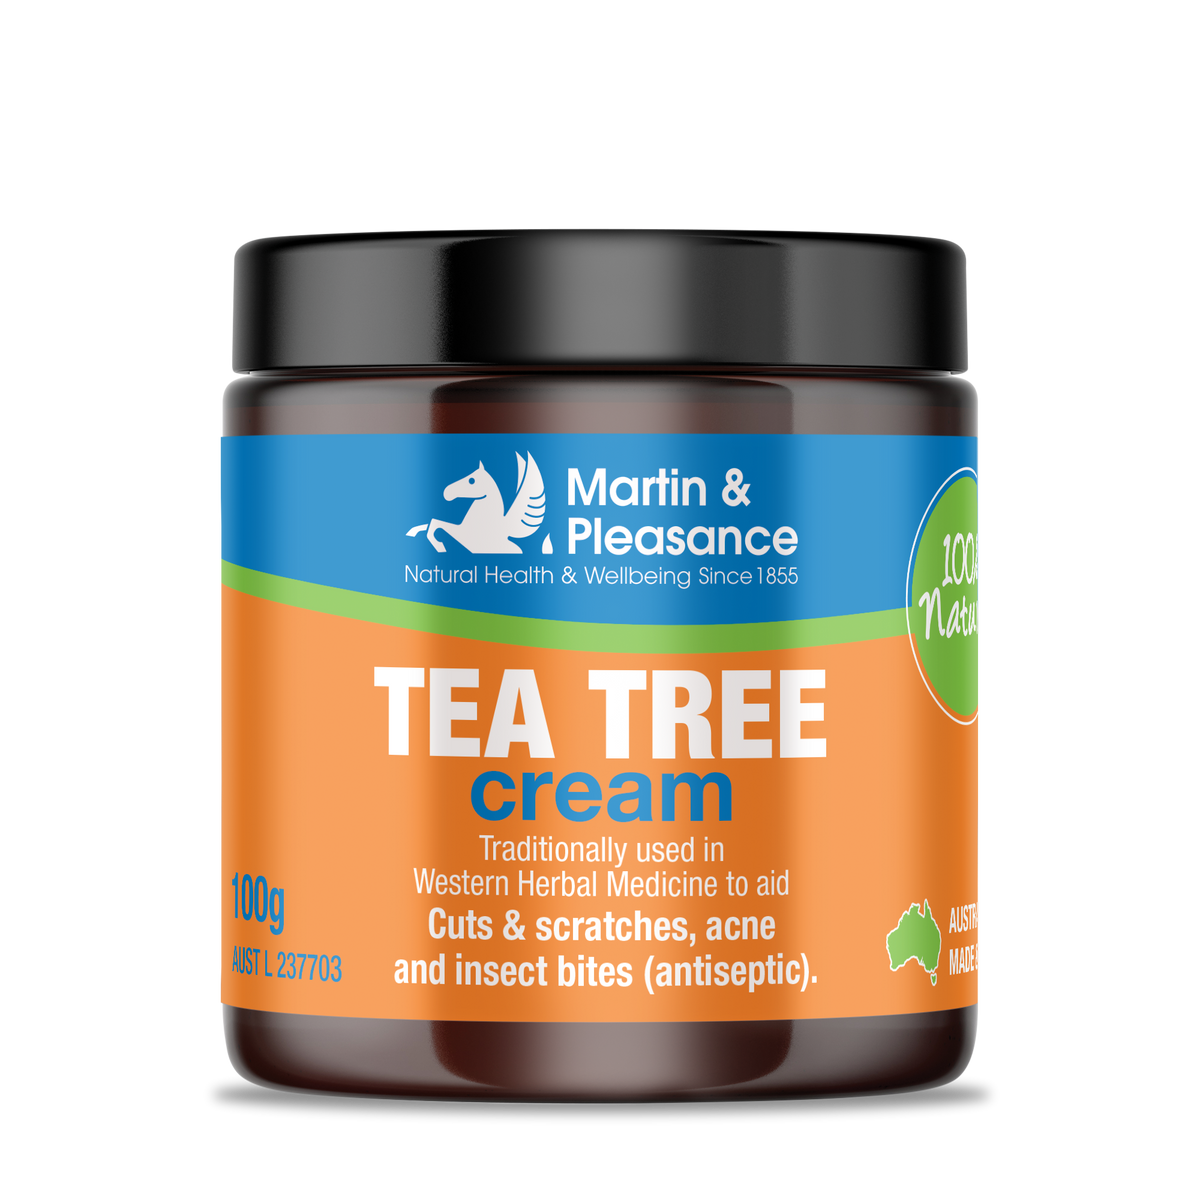 Martin & Pleasance All Natural Cream Tea Tree